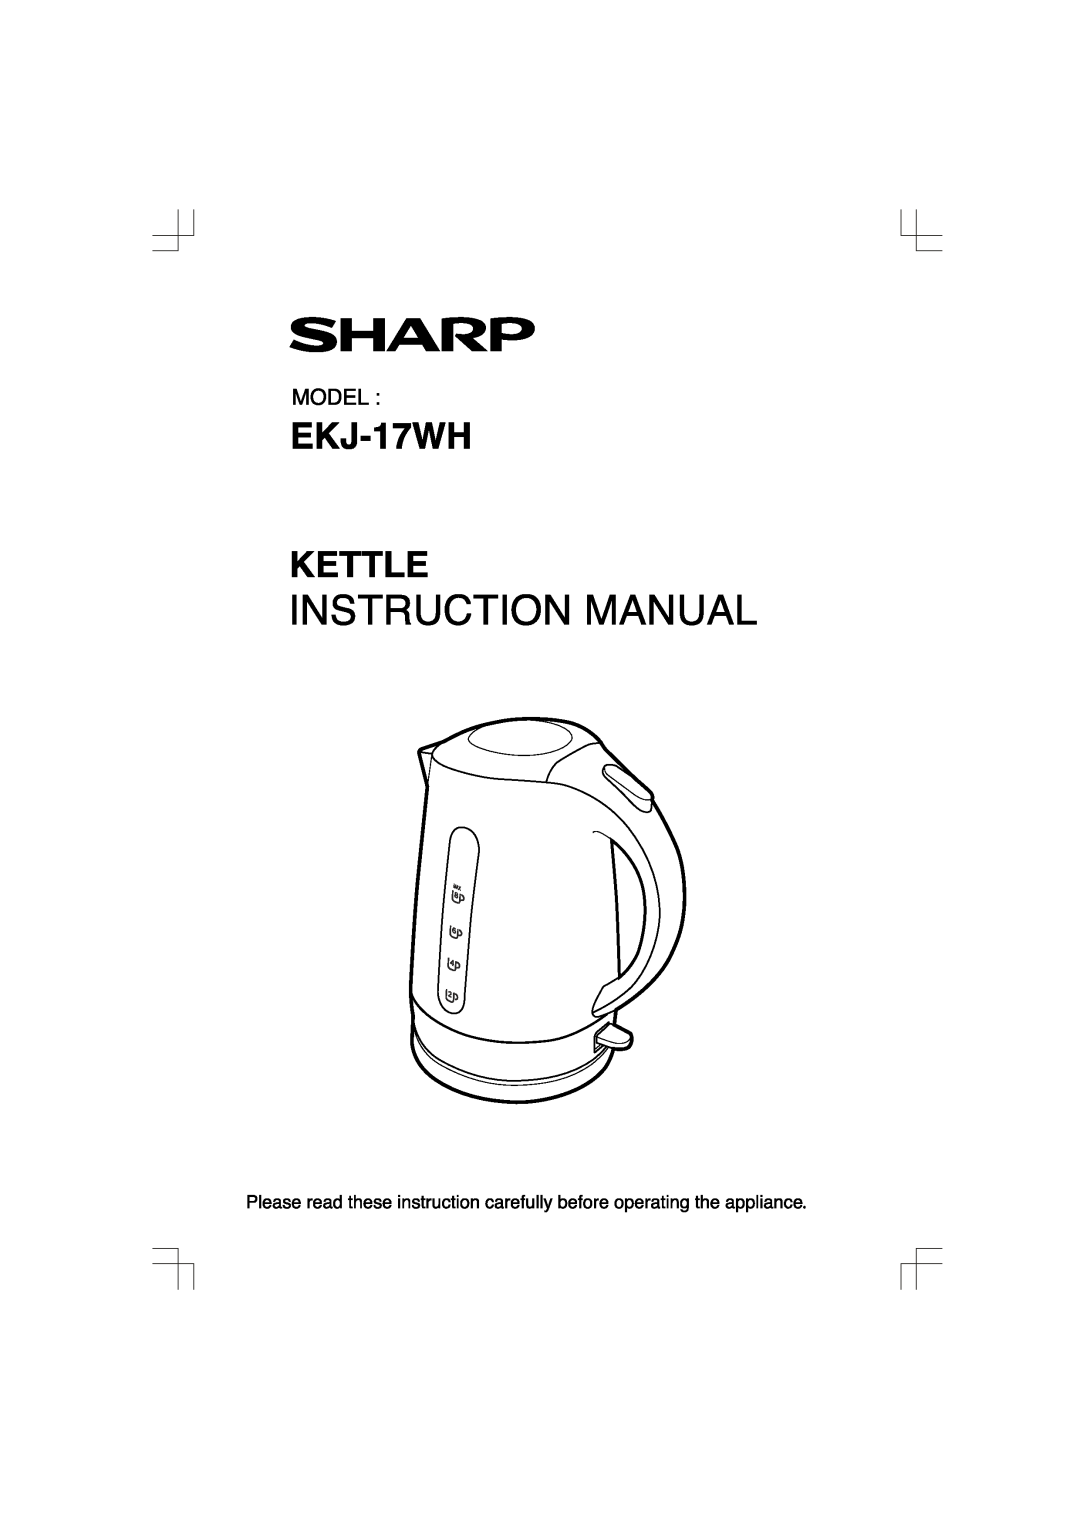 Sharp EKJ-17WH manual 